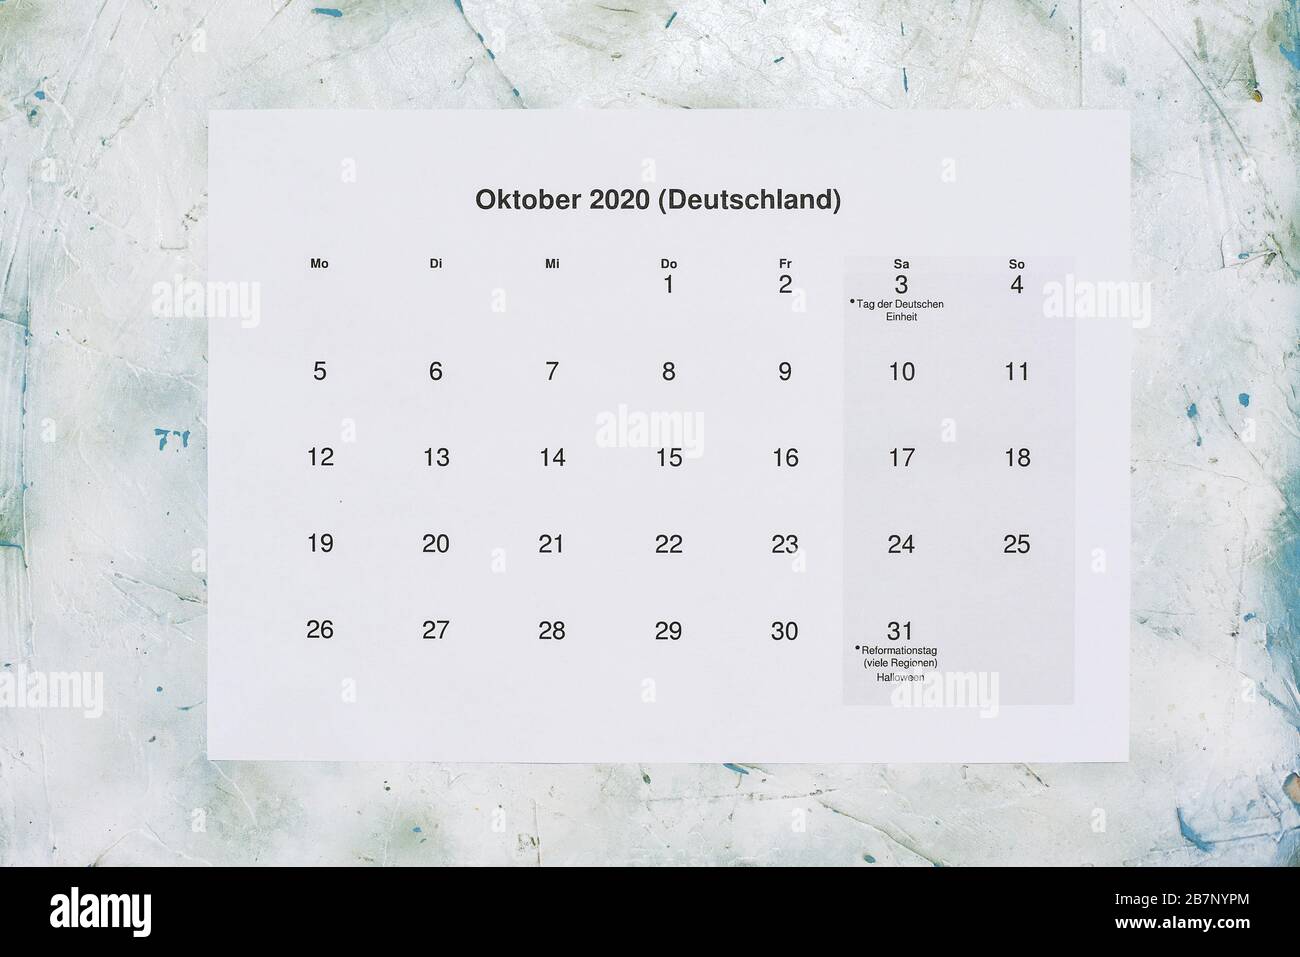 Monatskalender Oktober 2020. Translation: Monthly October 2020 calendar. Paper October month calendar in Dutch. Top view Stock Photo